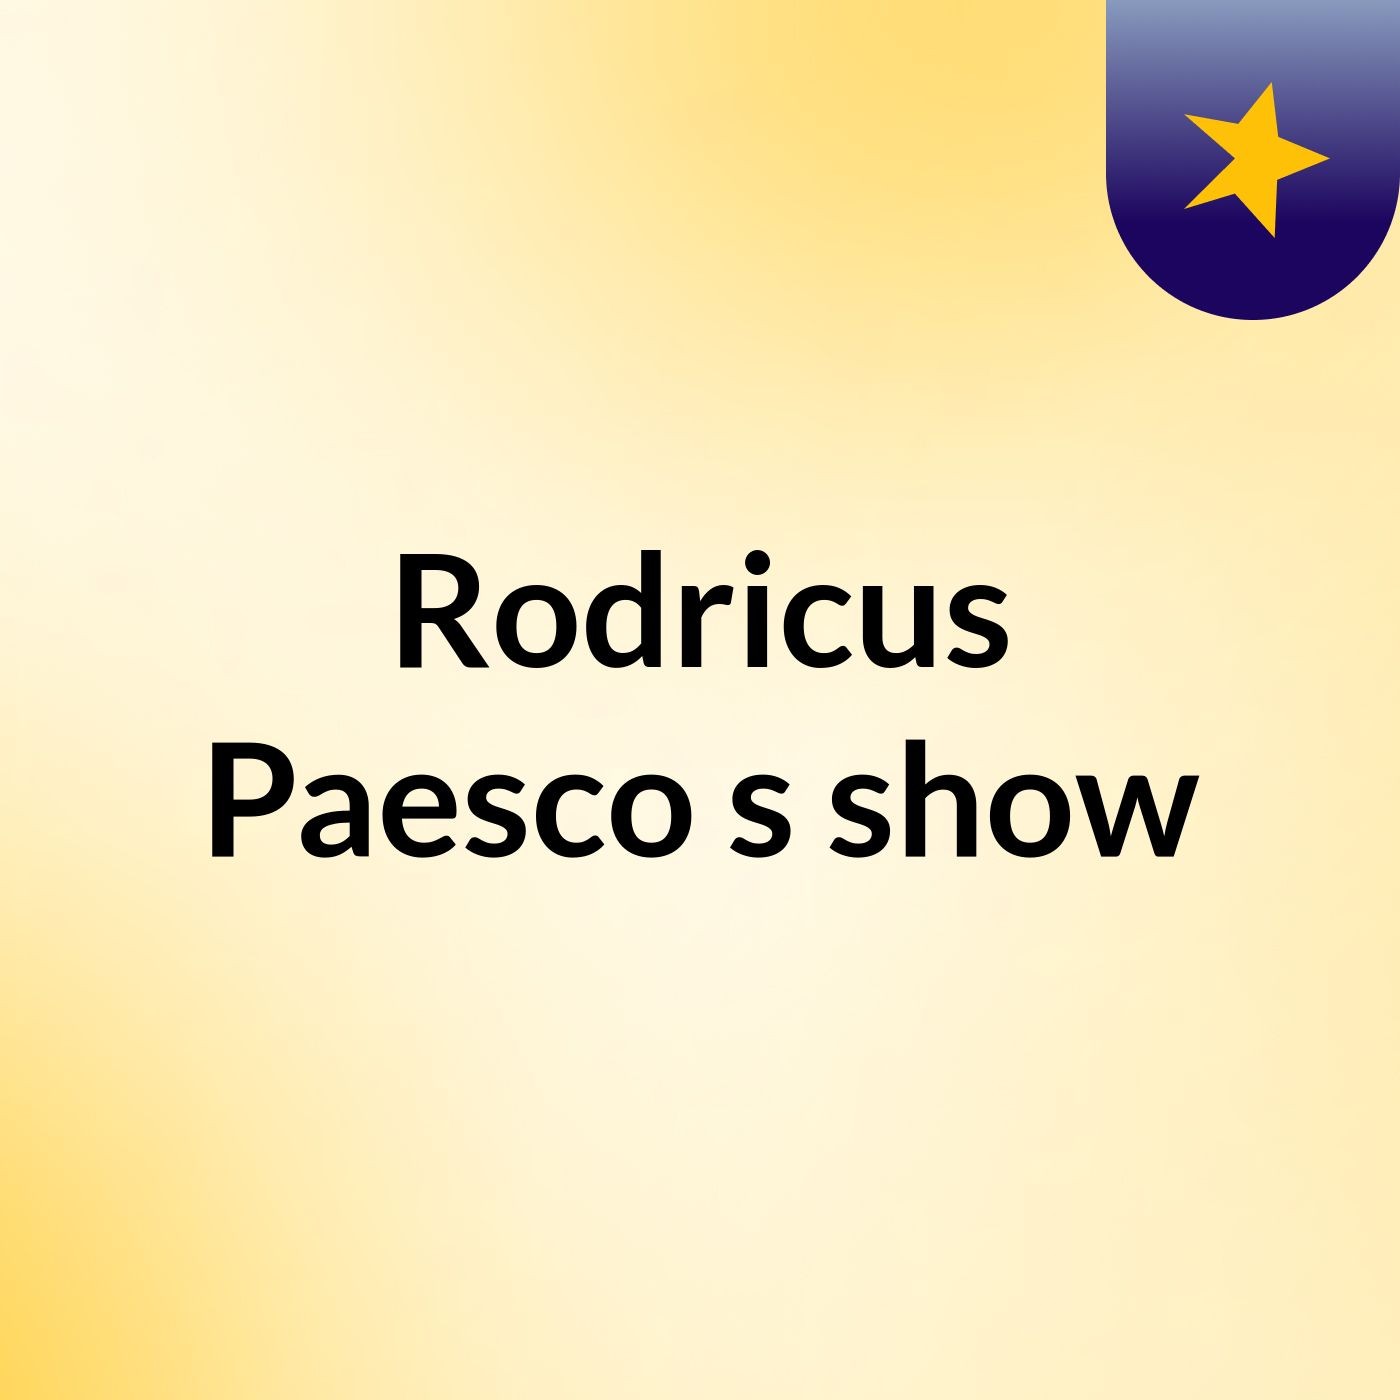 Rodricus Paesco's show